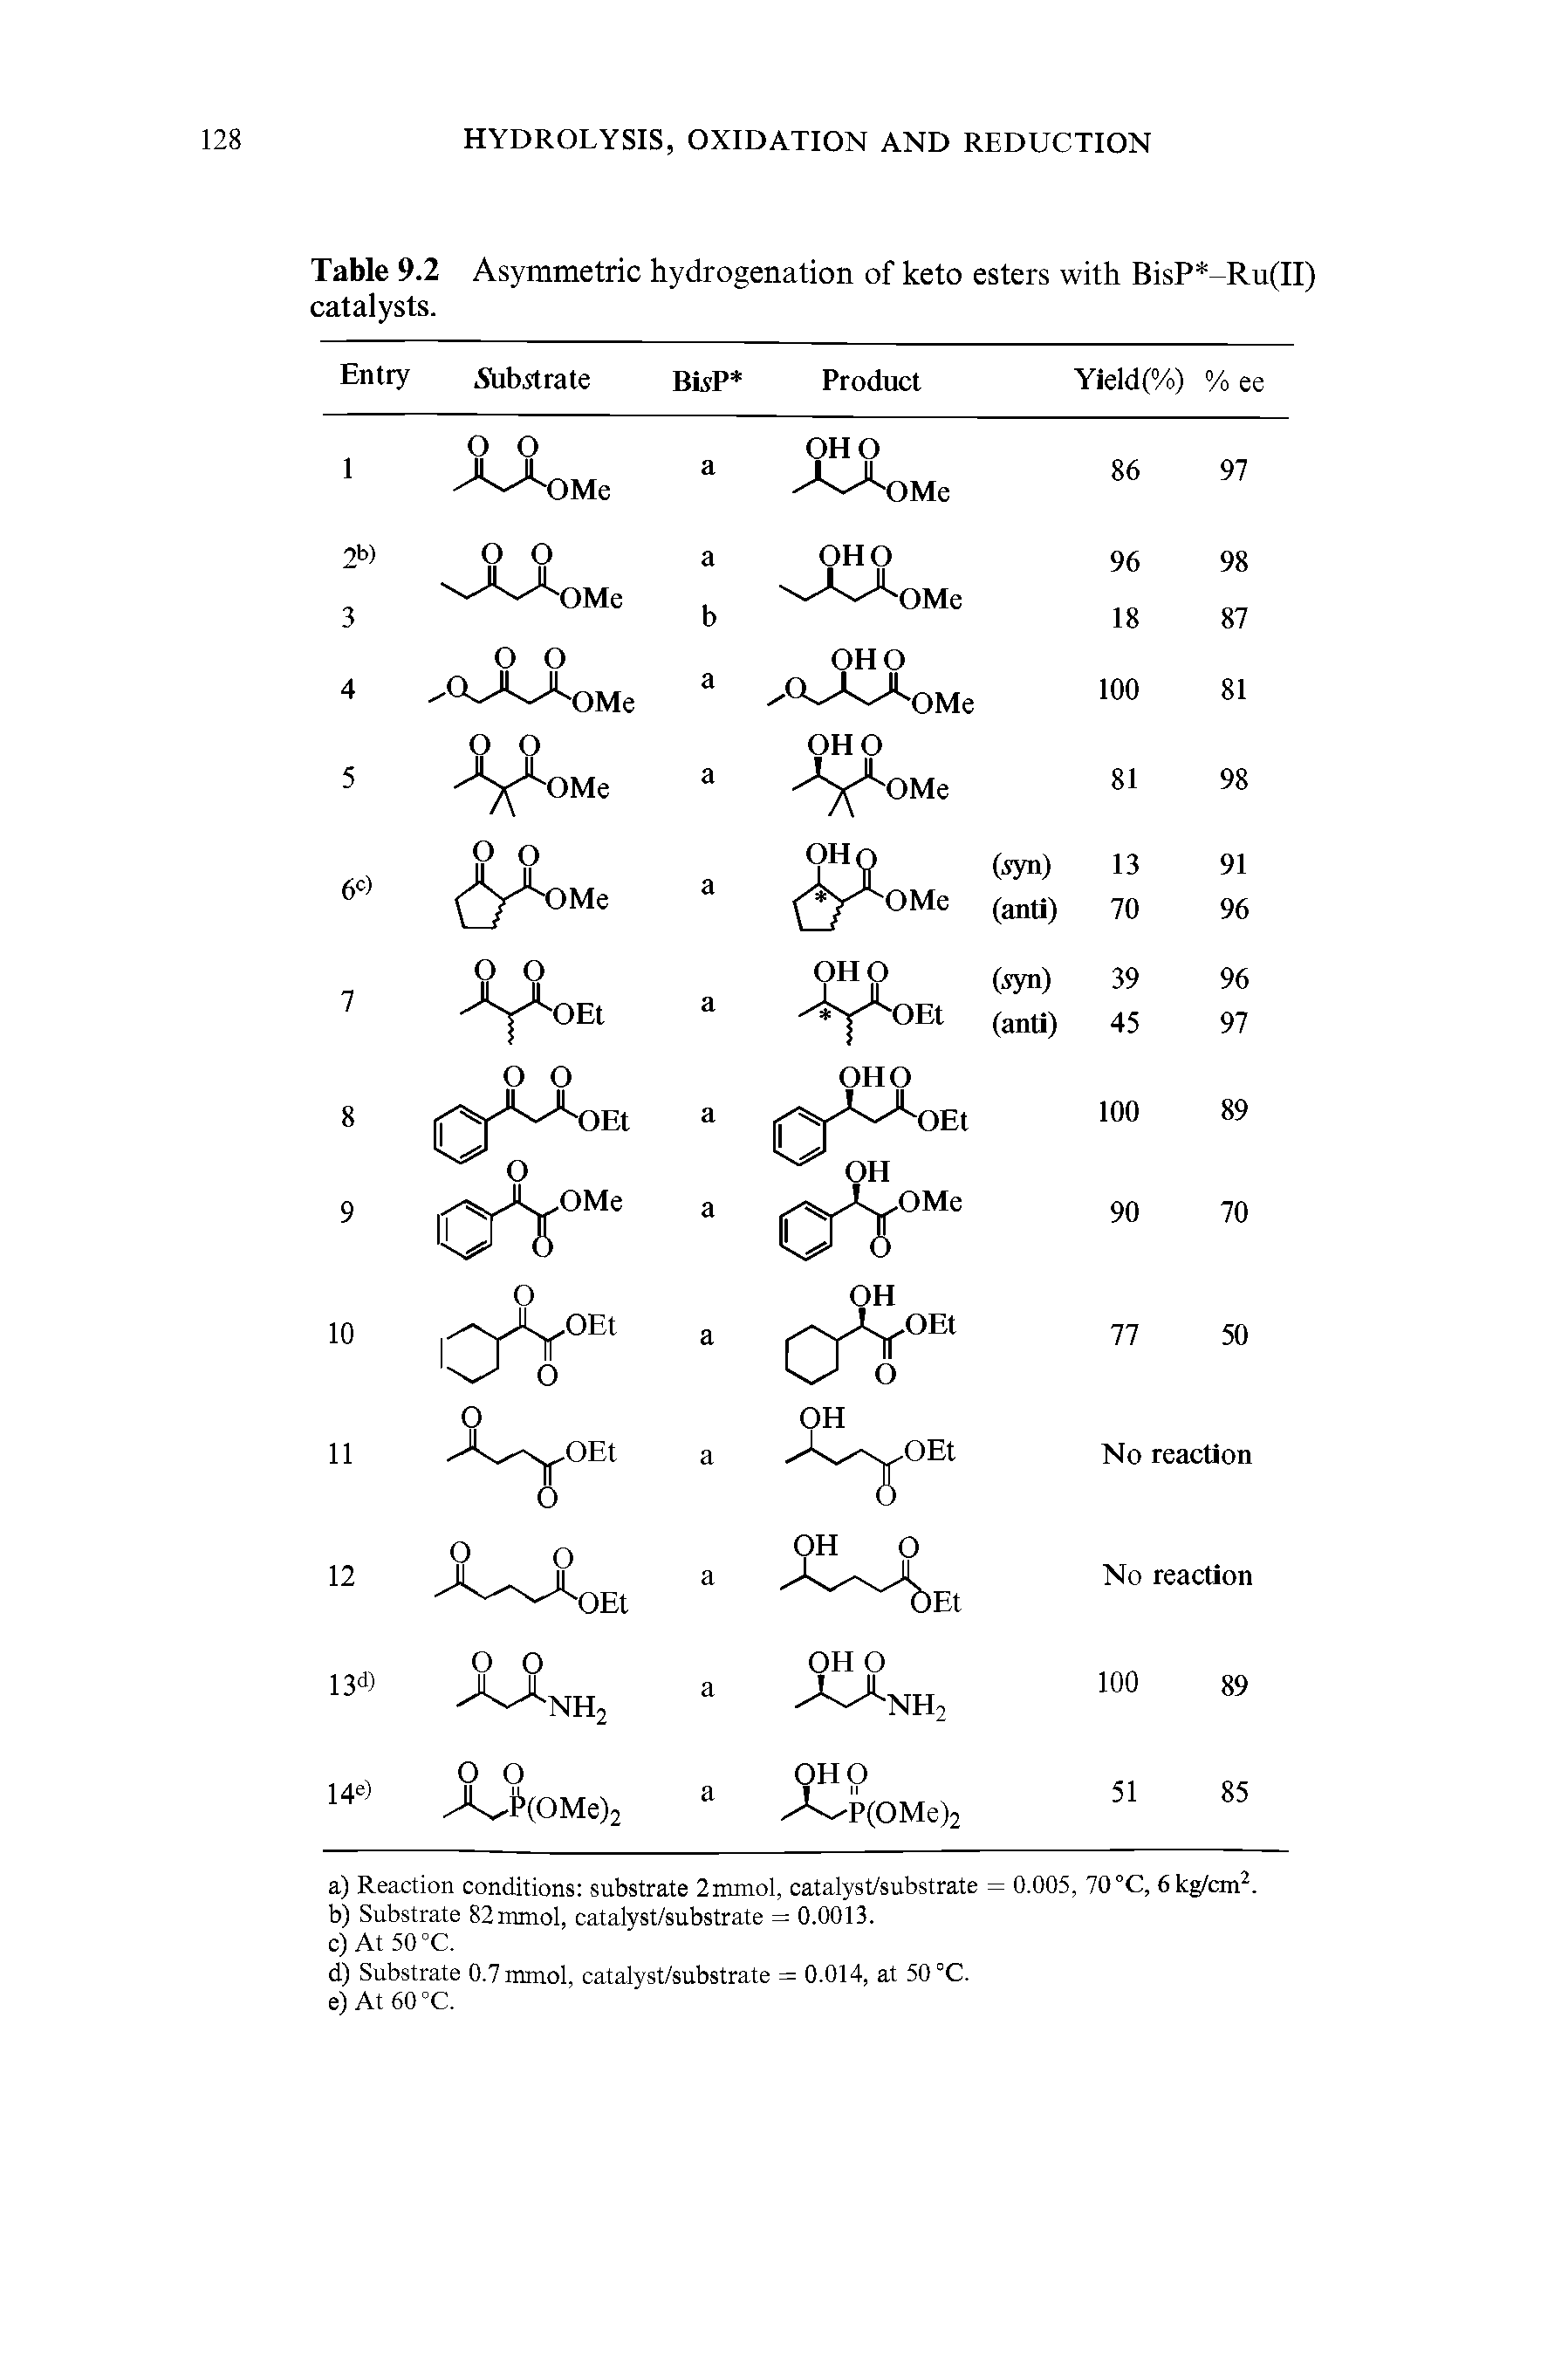 Table 9.2 Asymmetric hydrogenation of keto esters with BisP -Ru(II) catalysts.